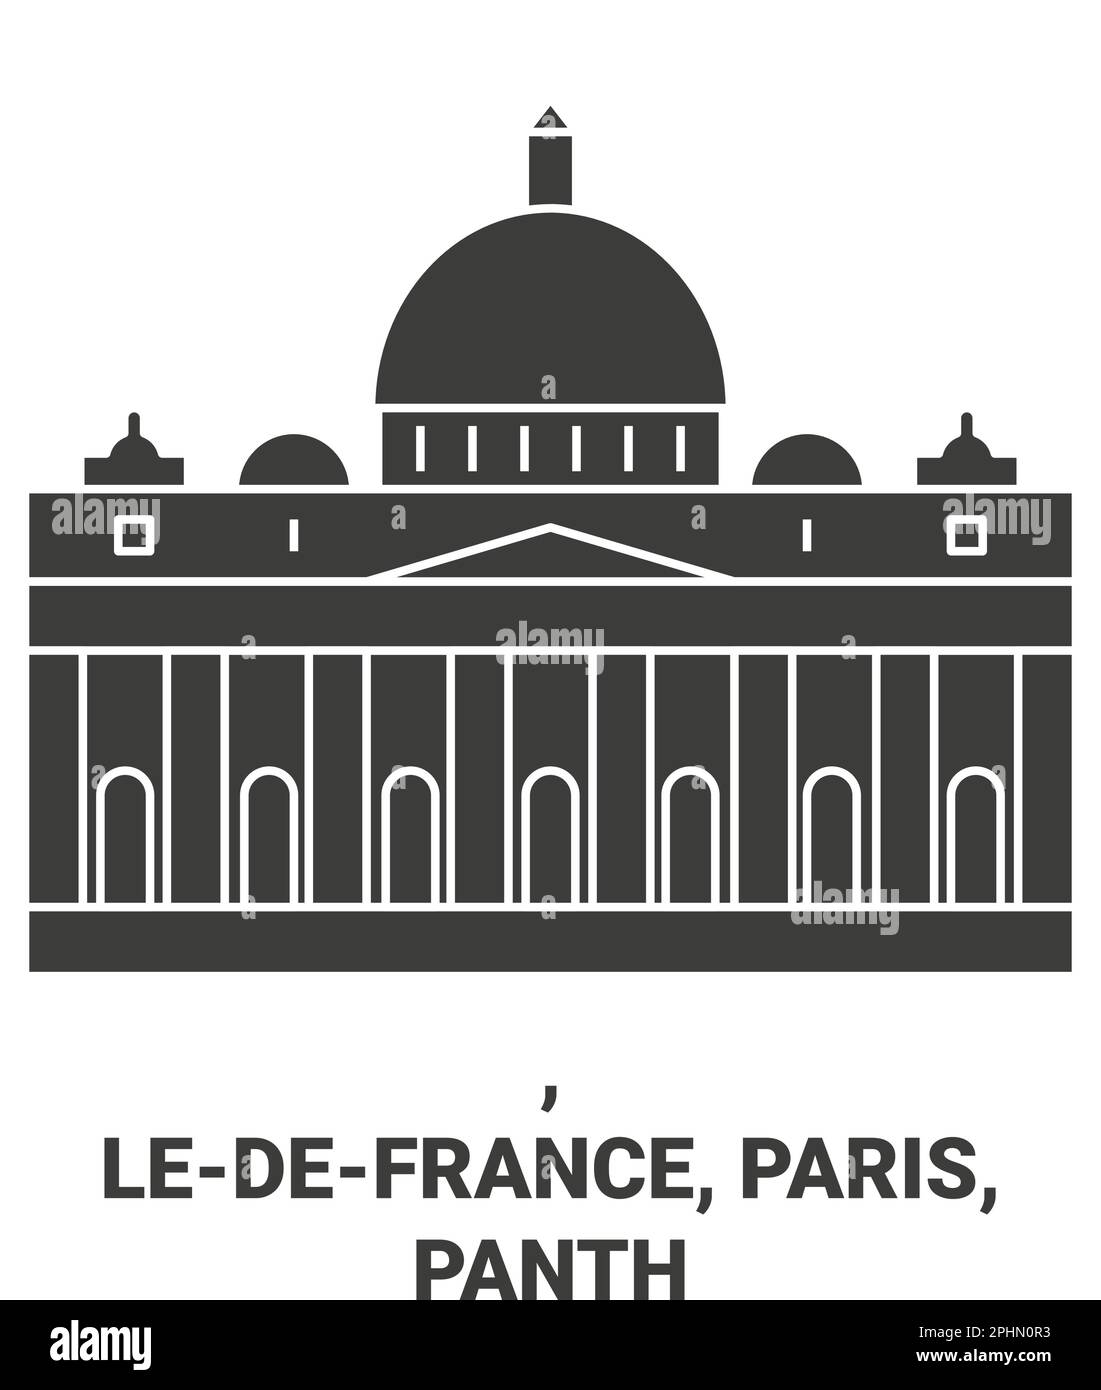 France, Paris, Panthon travel landmark vector illustration Stock Vector